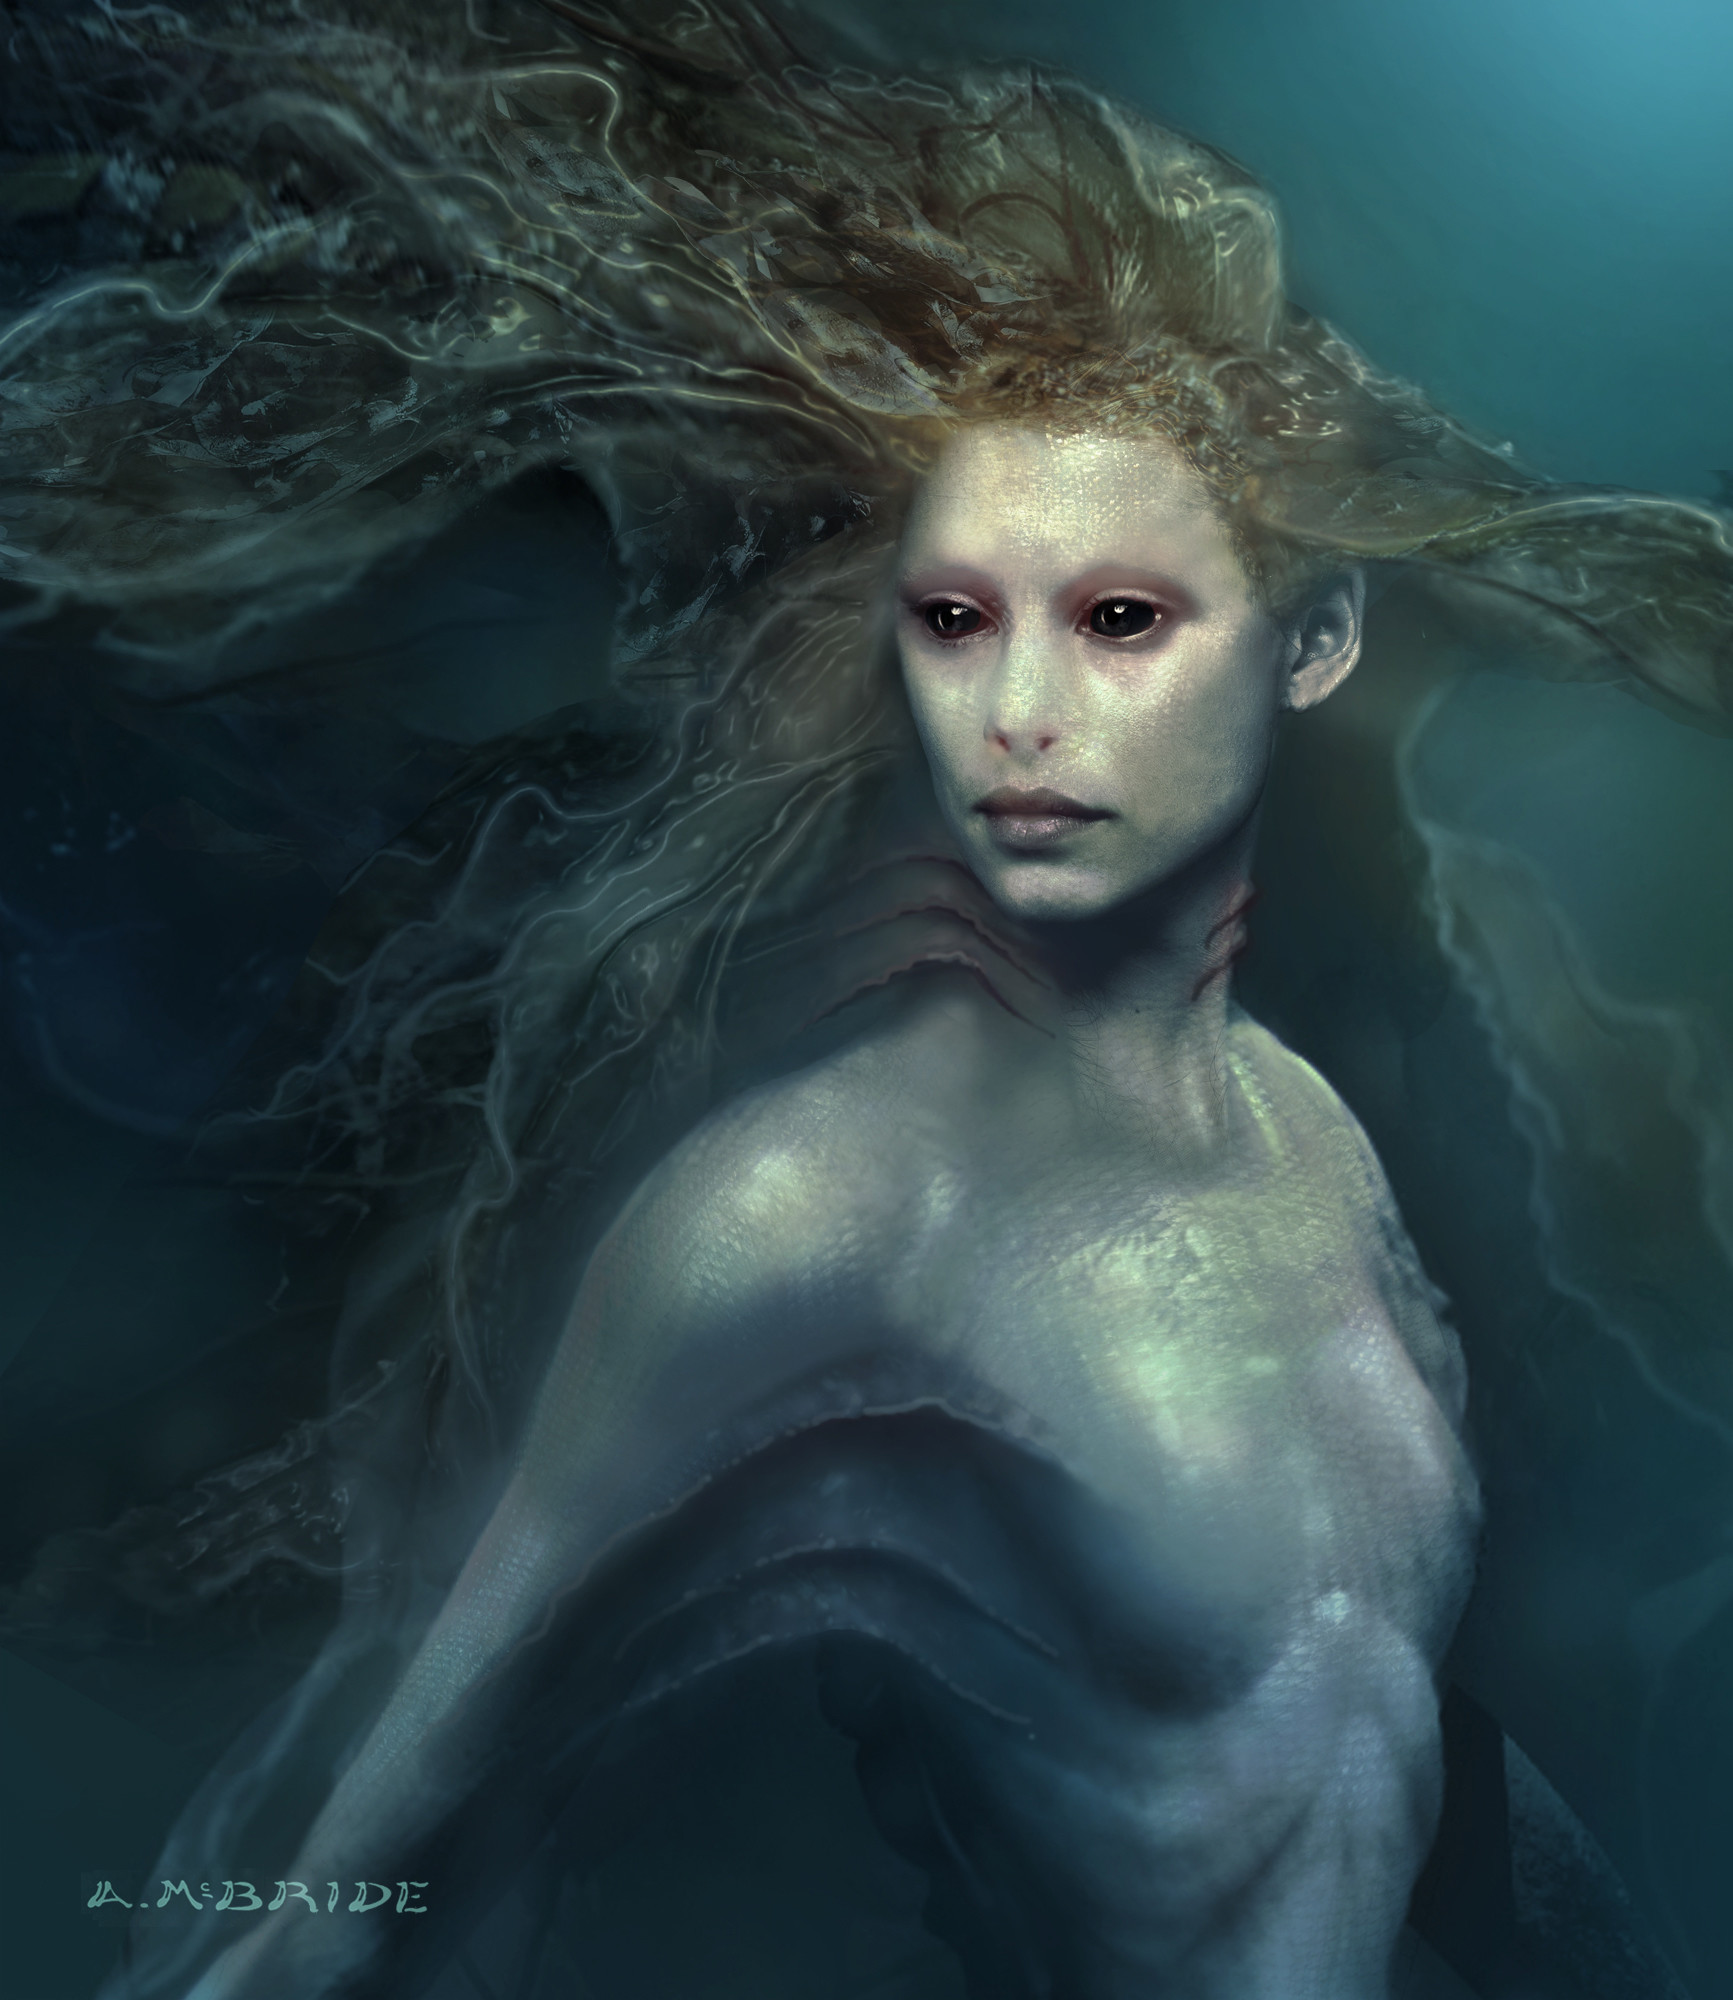 https://static.wikia.nocookie.net/atosas/images/4/44/Aaron-mcbride-mermaid-portrait-03.jpg/revision/latest?cb=20200201200336